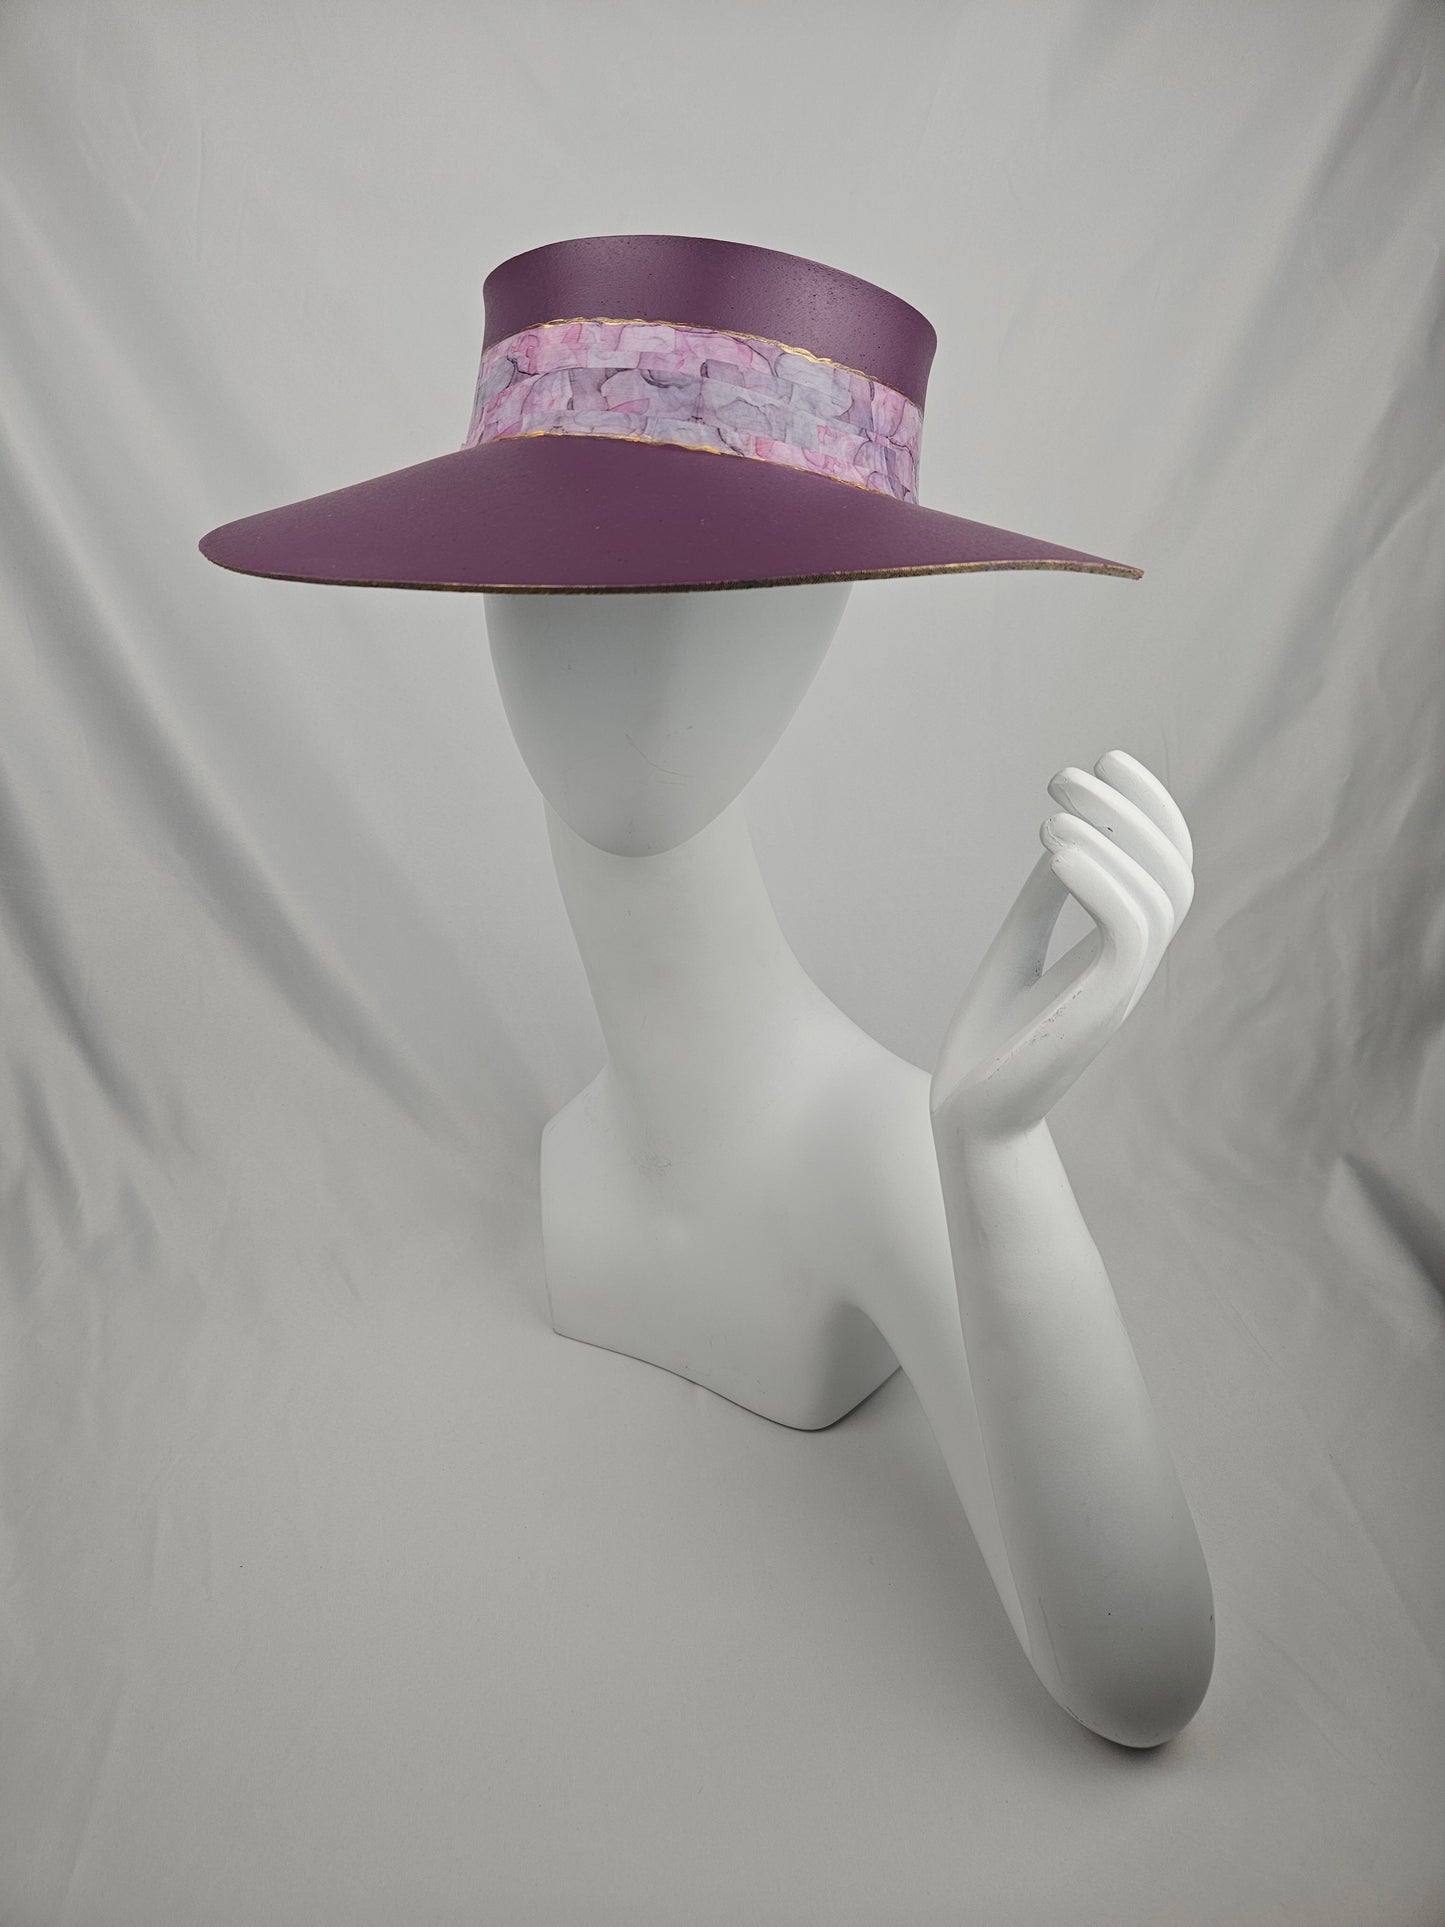 Trending Purple Audrey Foam Sun Visor Hat with Marbled Style Band: 1950s, Walks, Brunch, Asian, Golf, Easter, Church, No Headache, Derby